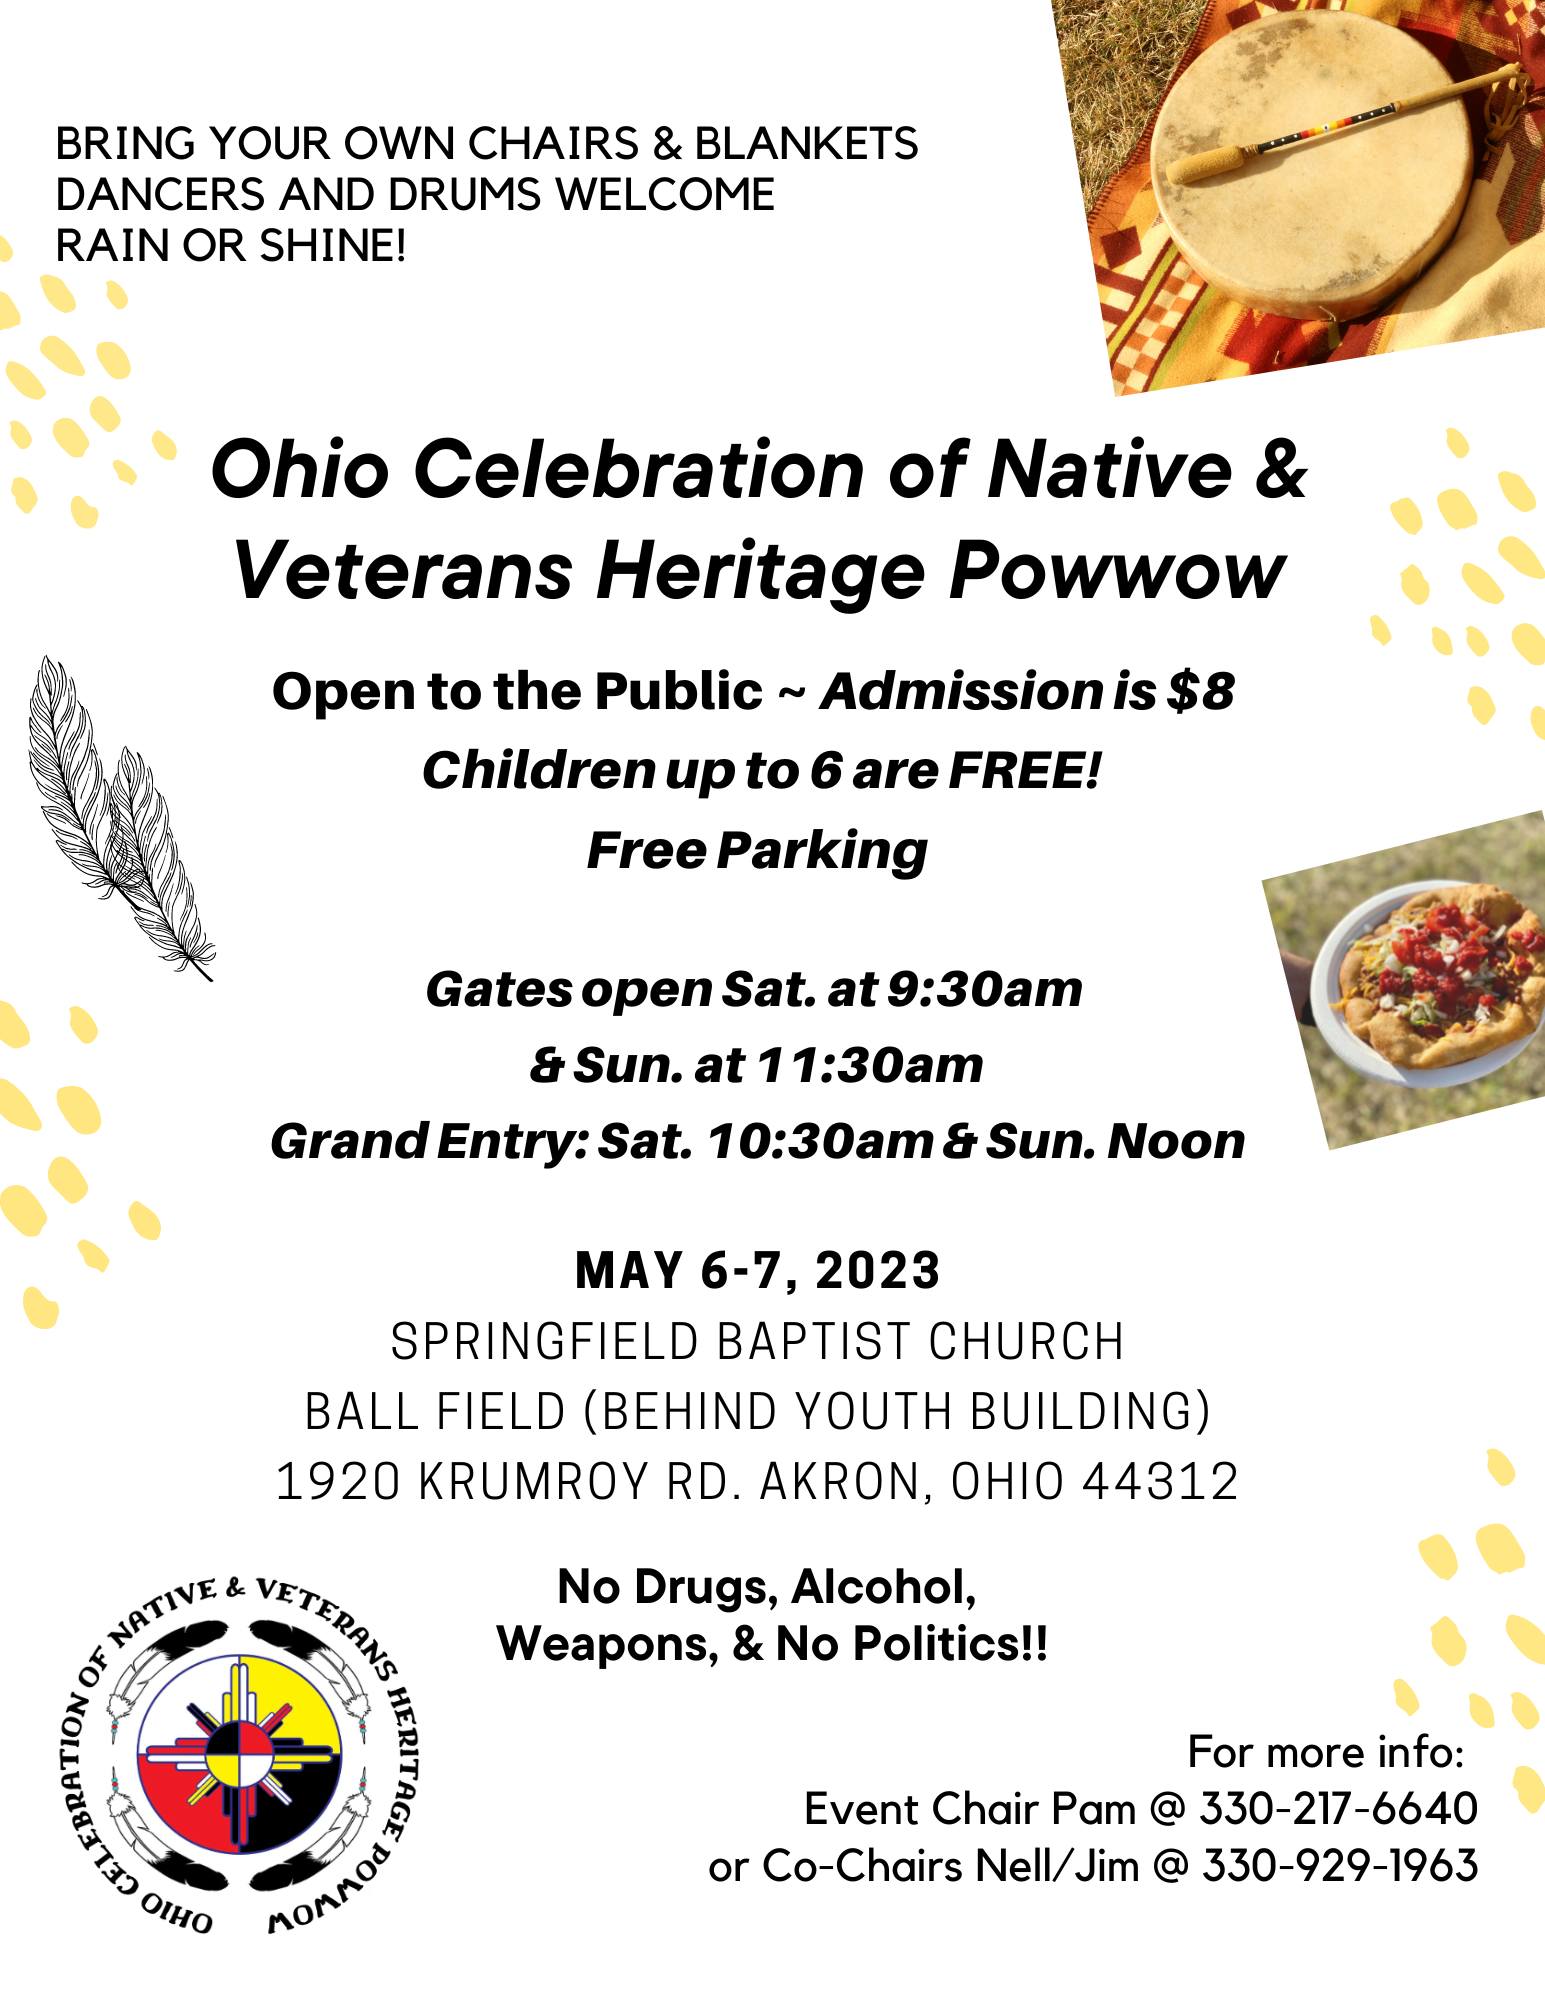 Ohio Celebration of Native American & Veteran Heritage Powwow